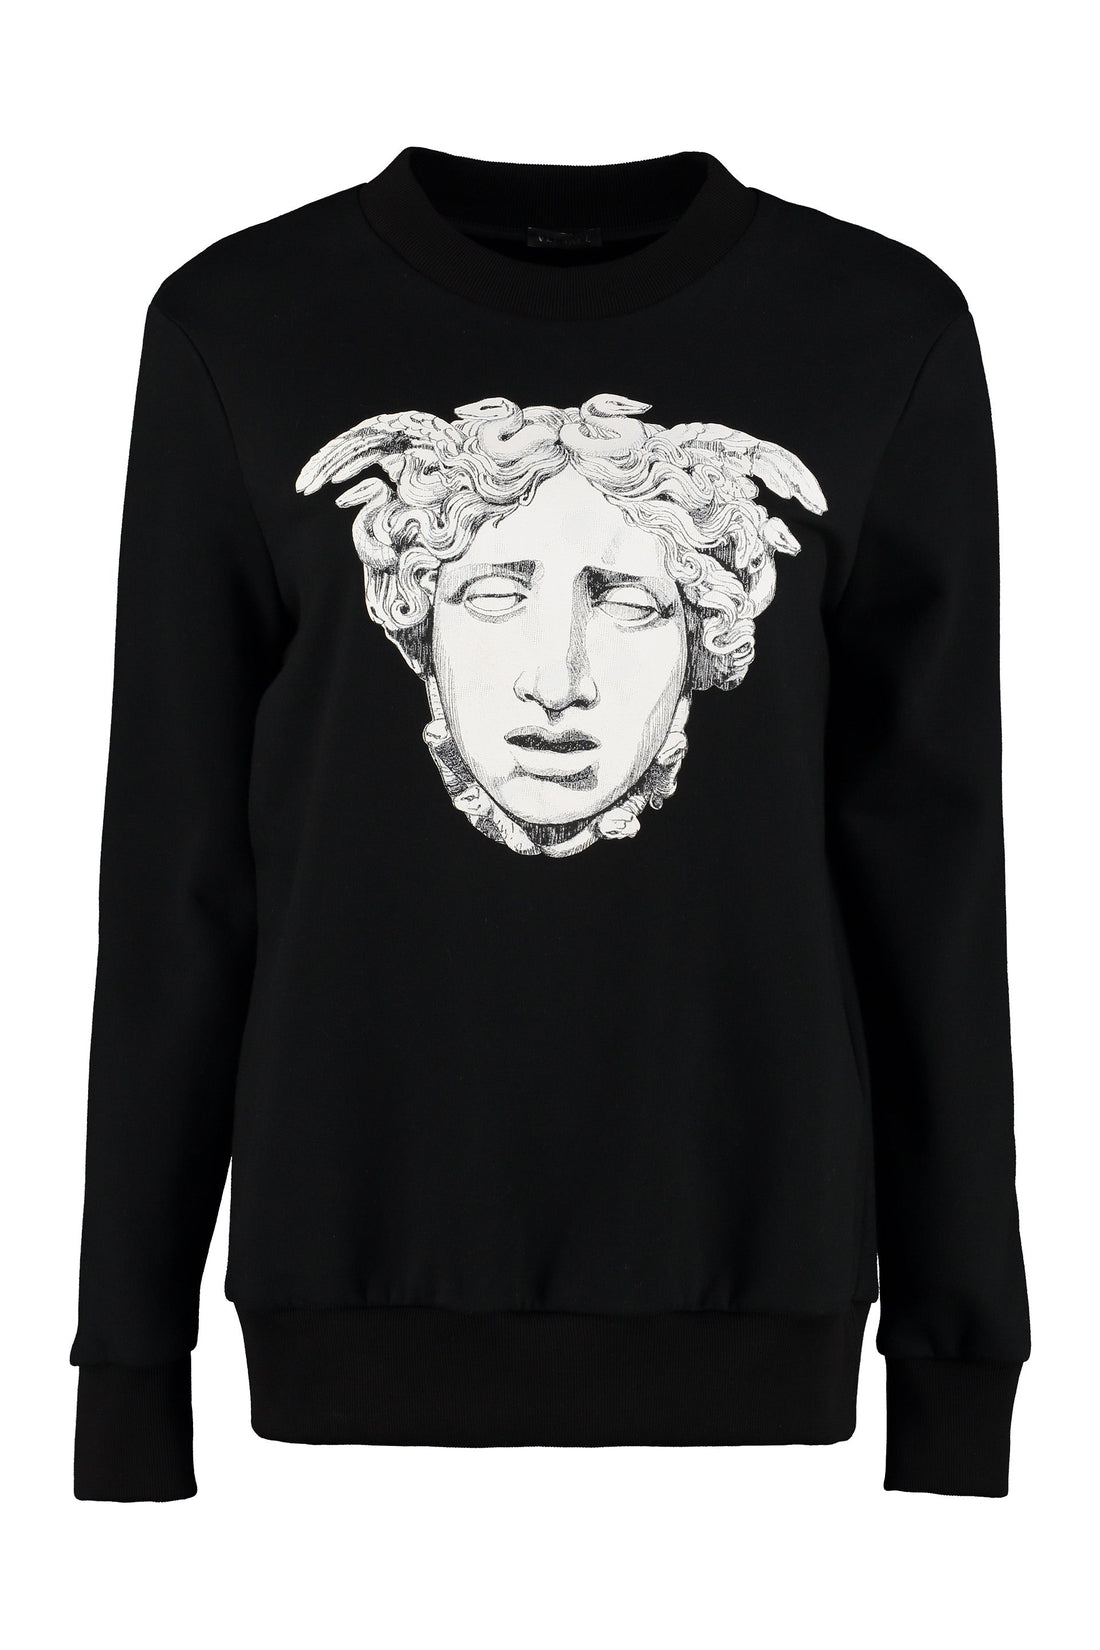 Versace-OUTLET-SALE-Printed oversize sweatshirt-ARCHIVIST